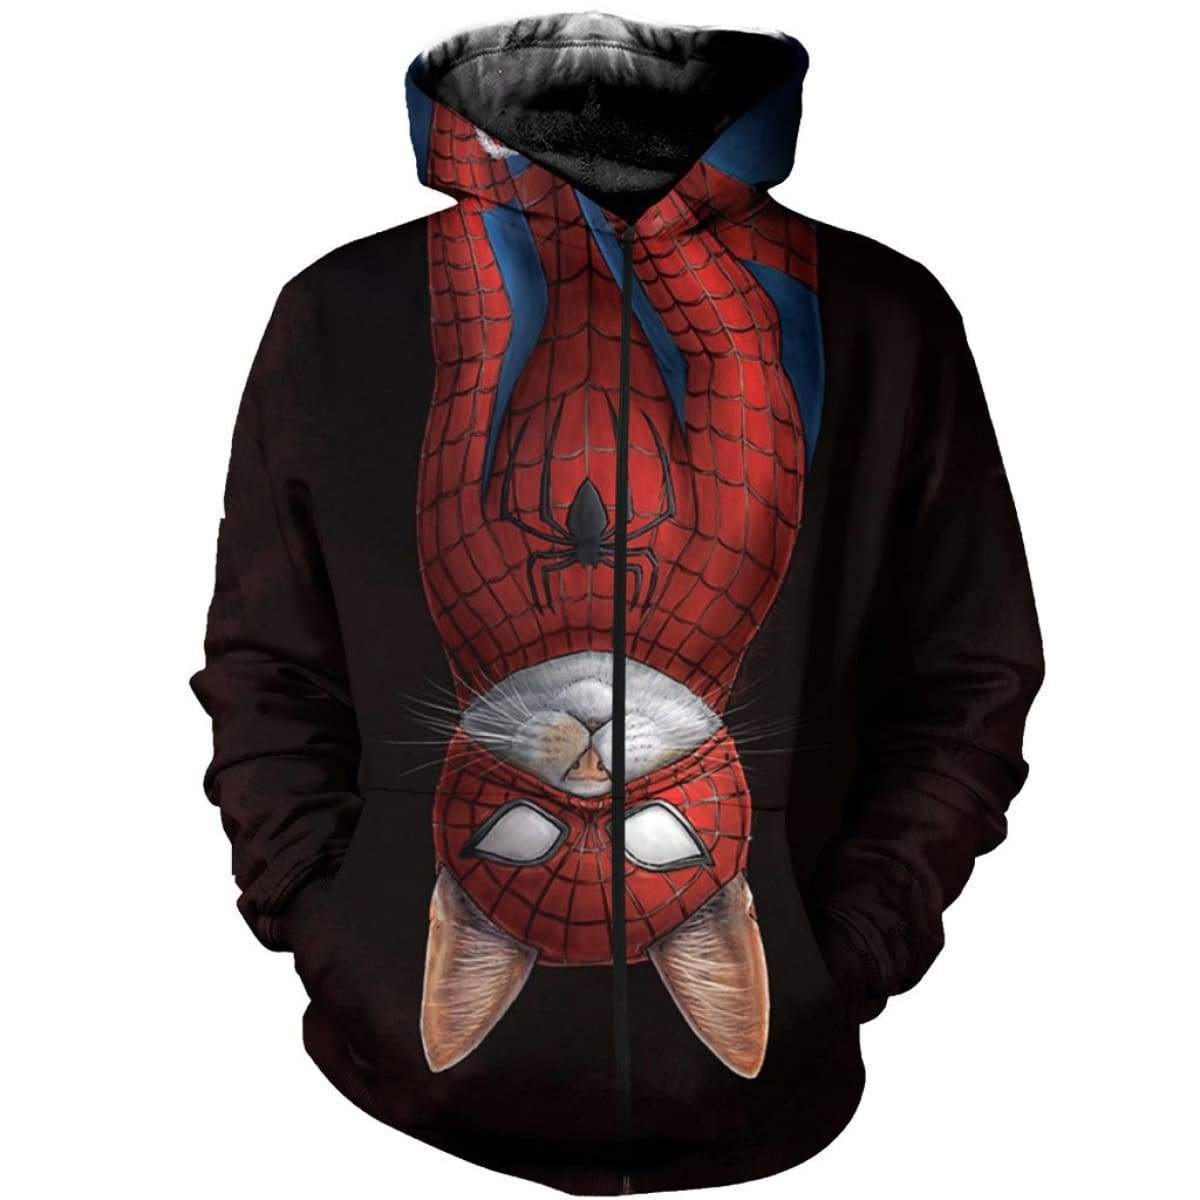 Spider-cat all over printed zip hoodie